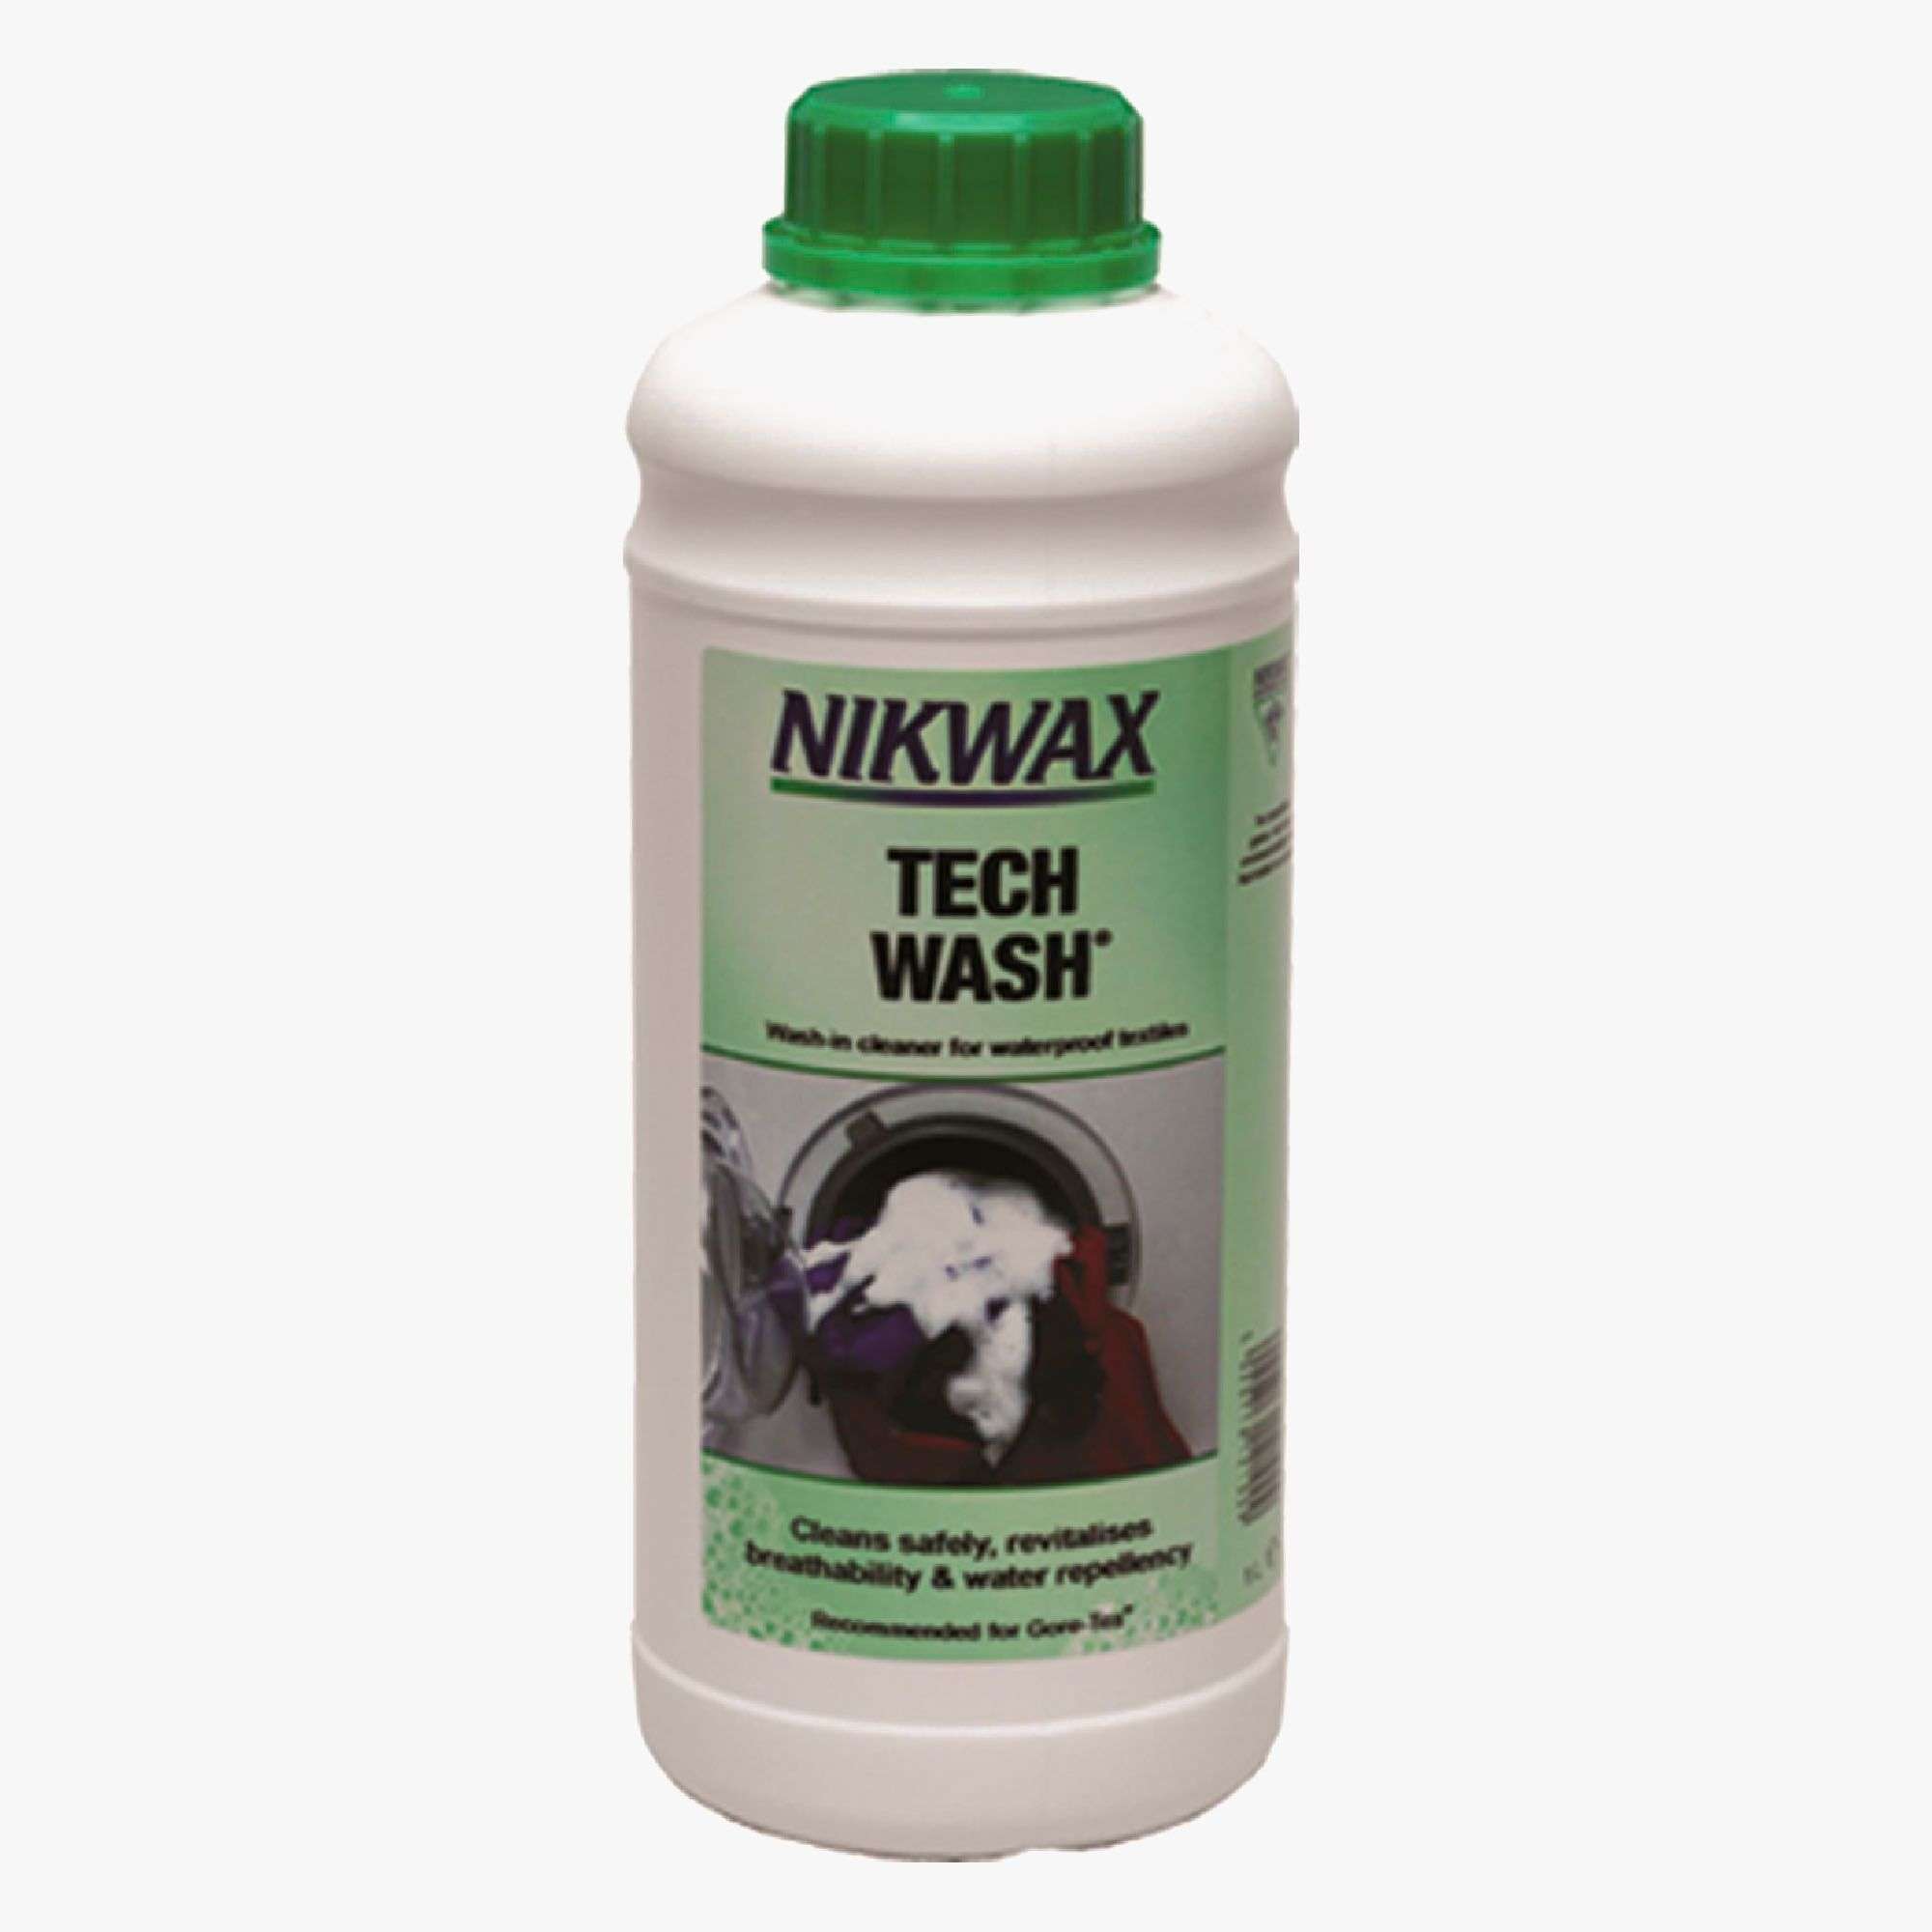 Nikwax, Nikwax Tech Wash, Waterproofing,Wylies Outdoor World,